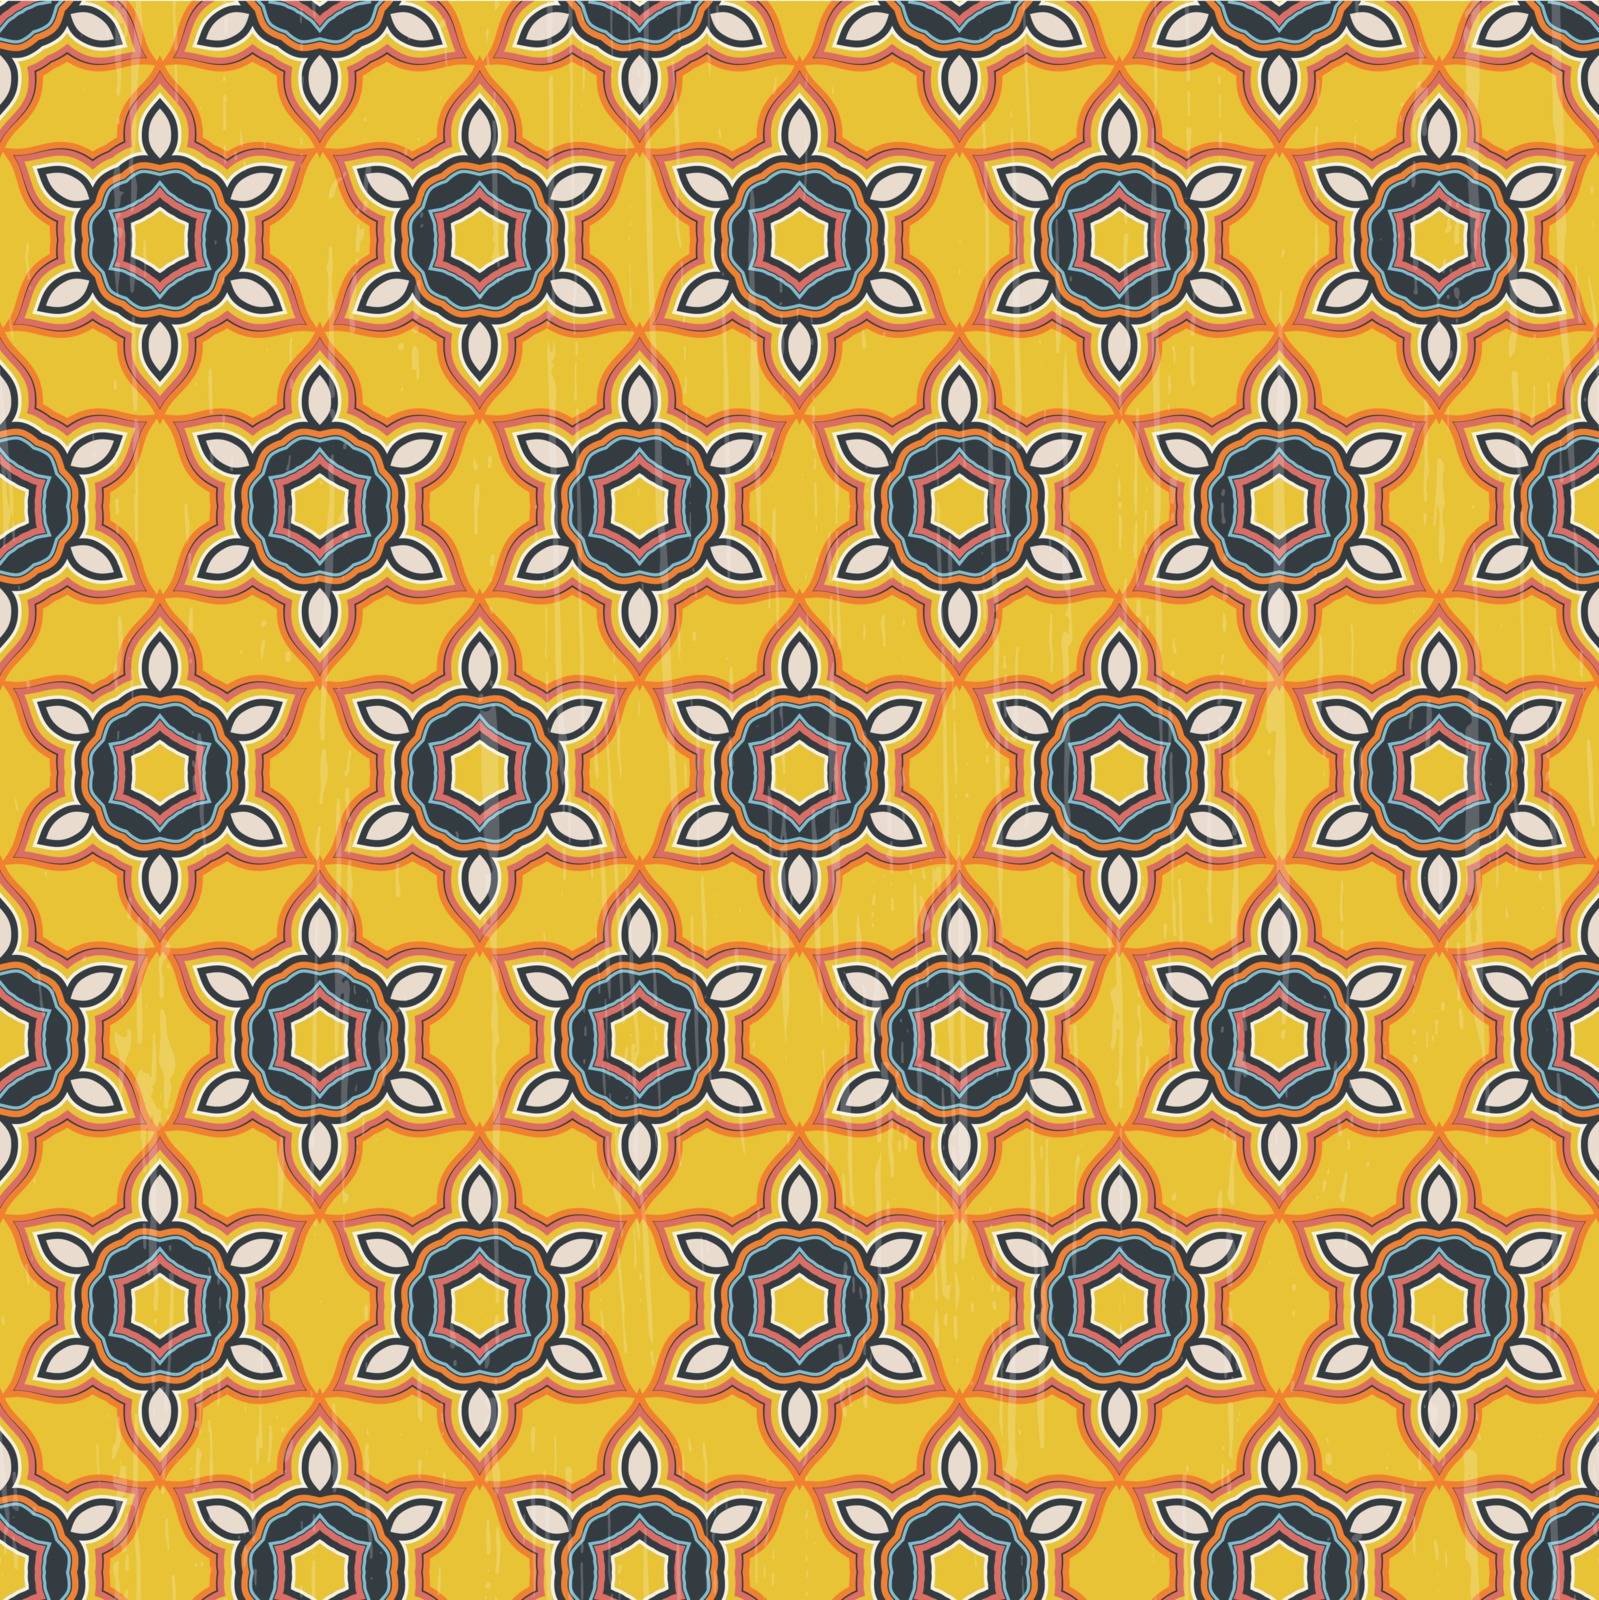 Geometrical Pattern by Favete